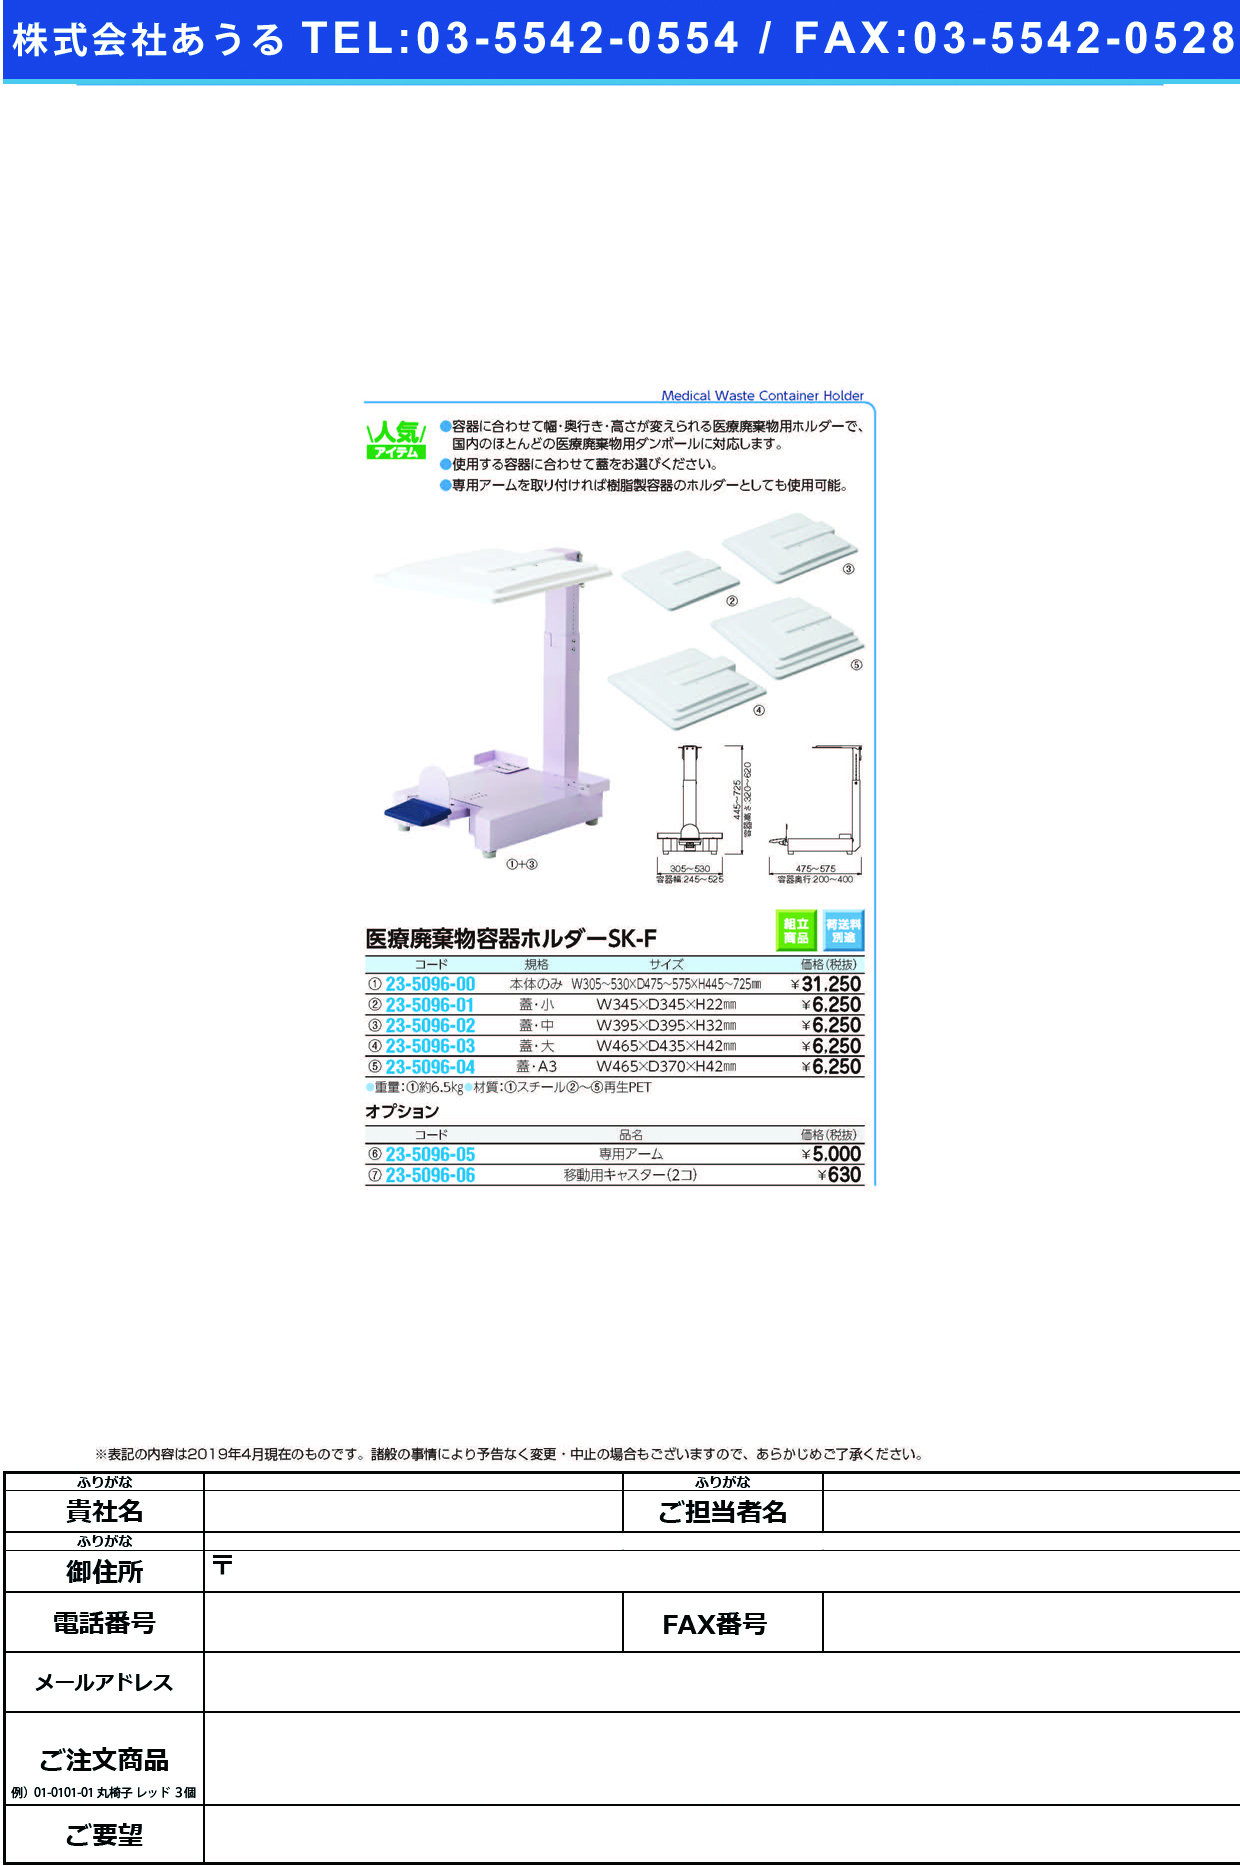 (23-5096-05)医療廃棄物ホルダーＳＫ－Ｆアーム YD-146L-OP5 ｲﾘｮｳﾊｲｷﾌﾞﾂﾎﾙﾀﾞｰｱｰﾑ(山崎産業)【1個単位】【2019年カタログ商品】